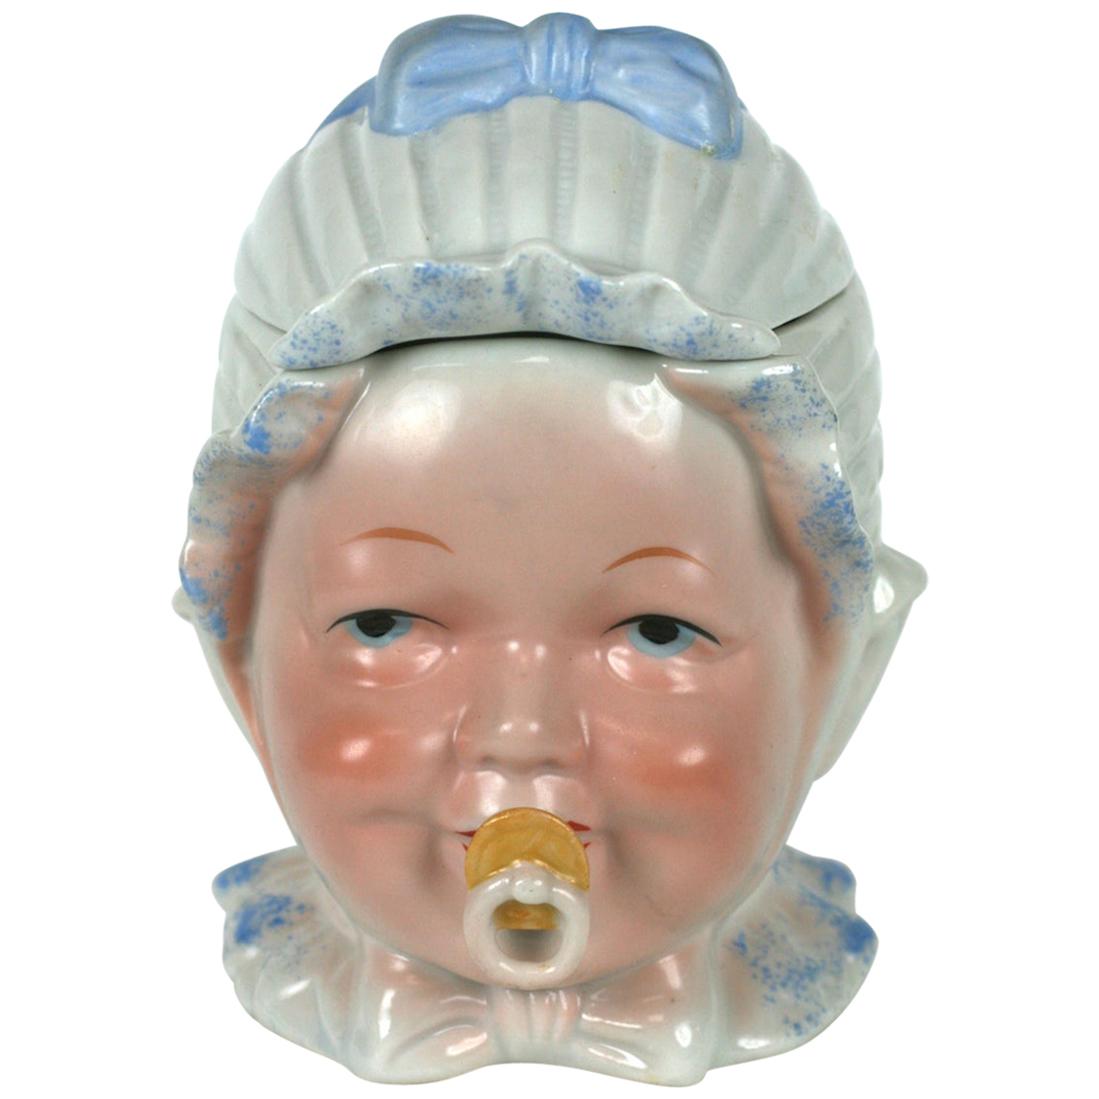 Victorian Porcelain Baby Head Jar or Humidor, Germany